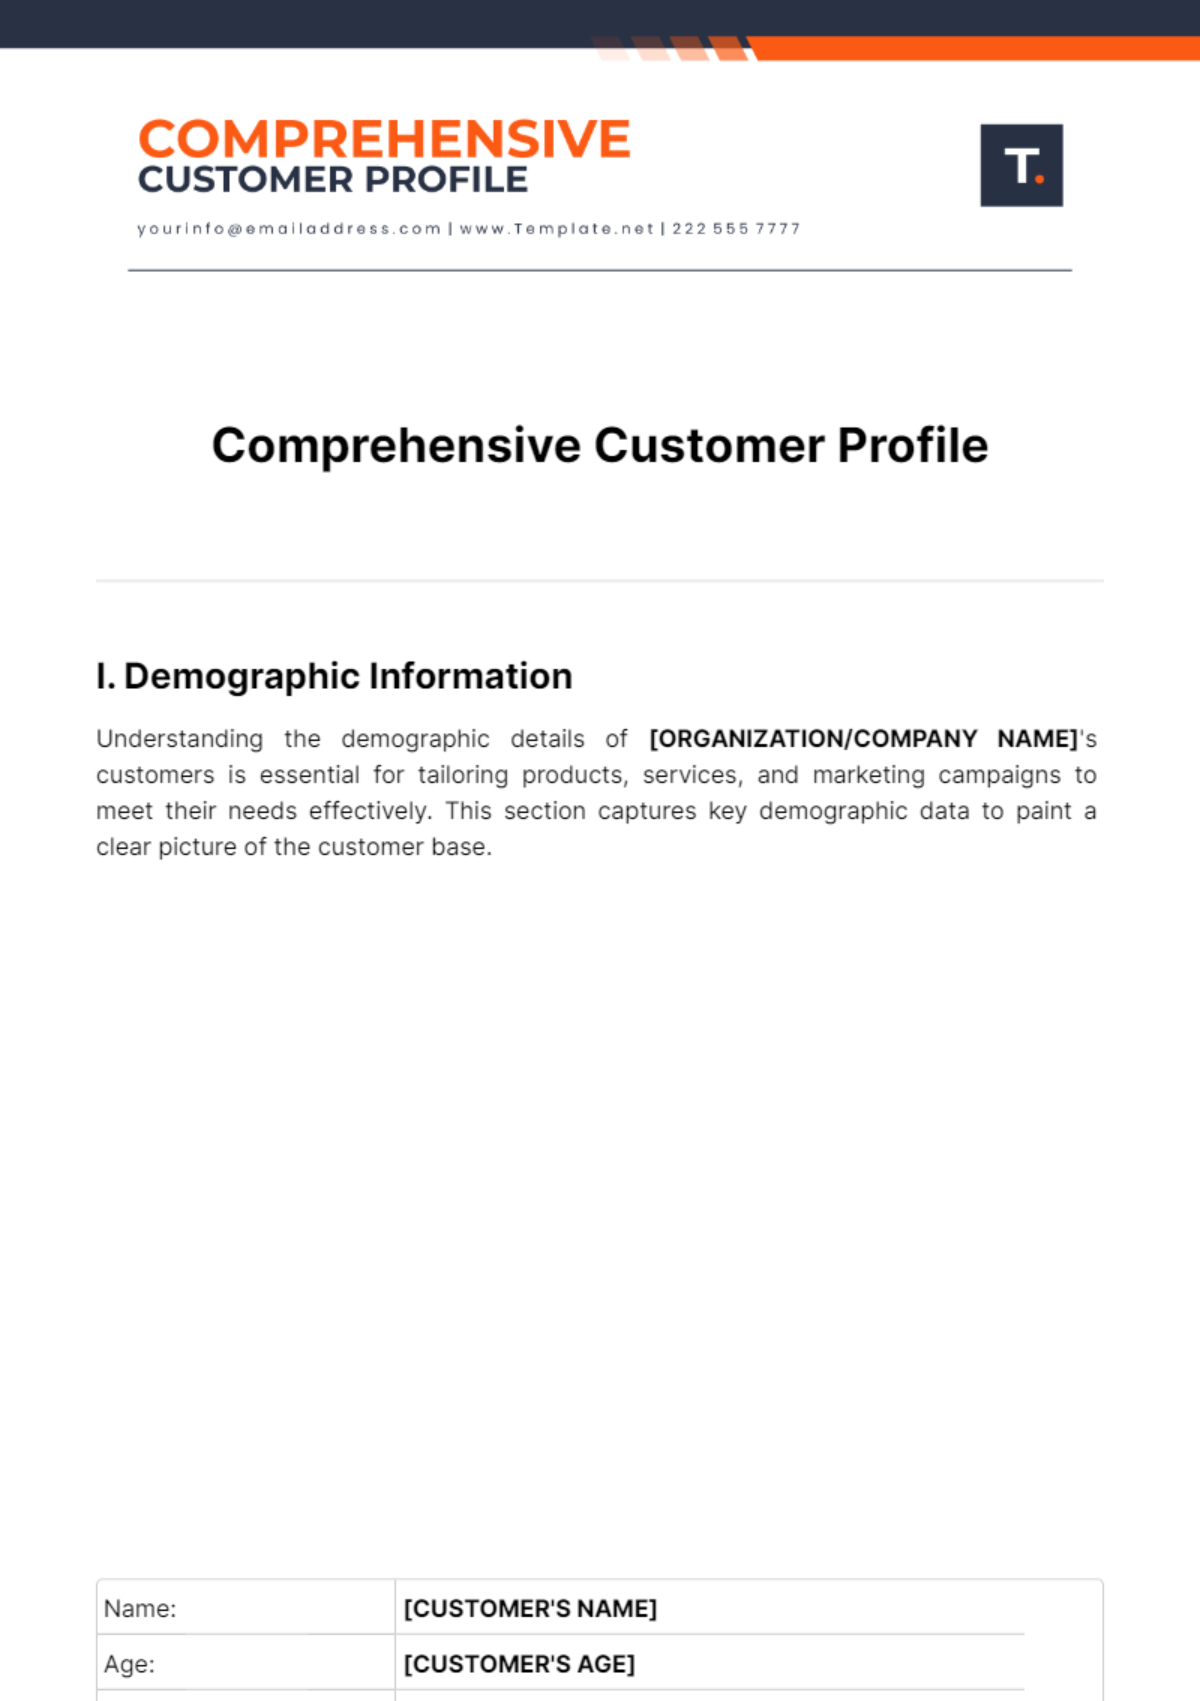 Comprehensive Customer Profile Template